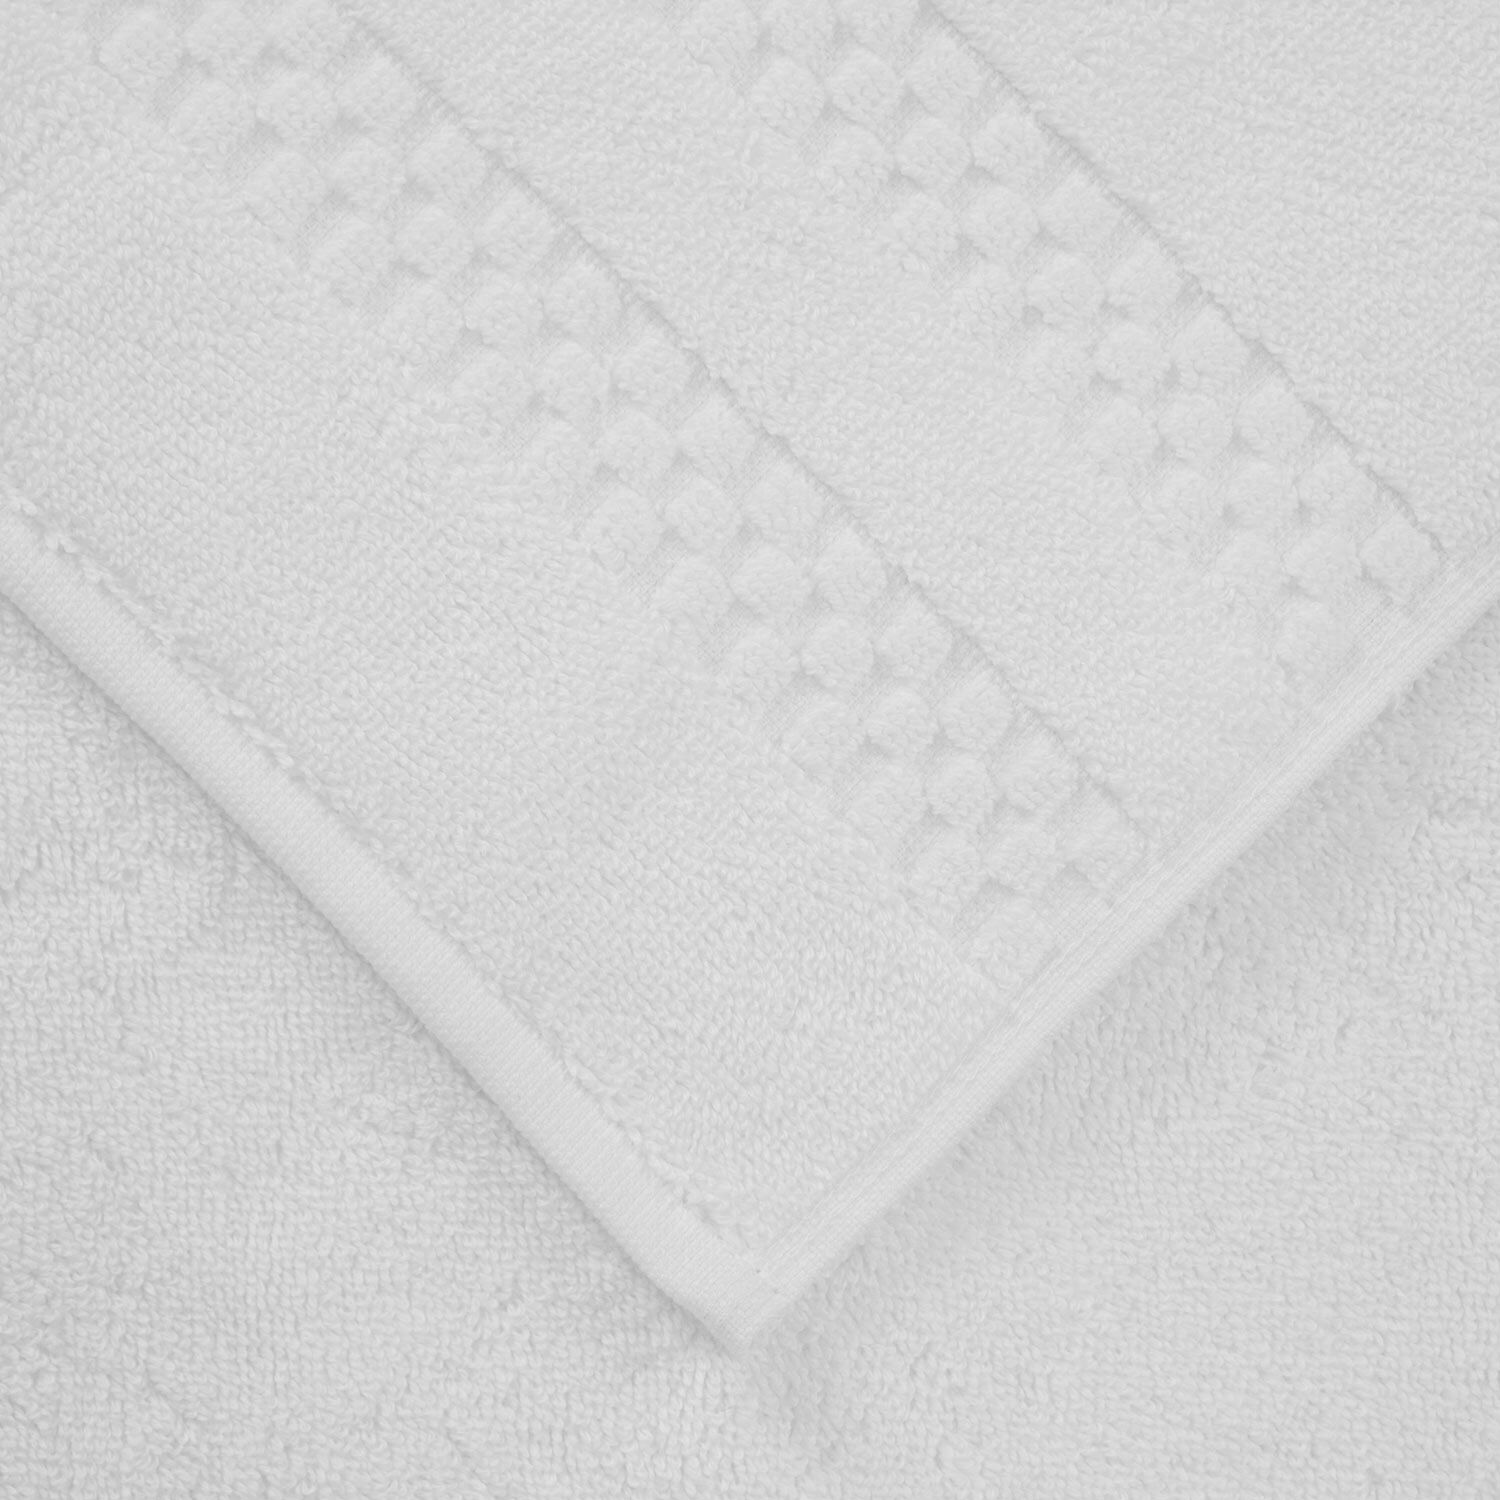 slide 3 Checkerboard Hand Towel